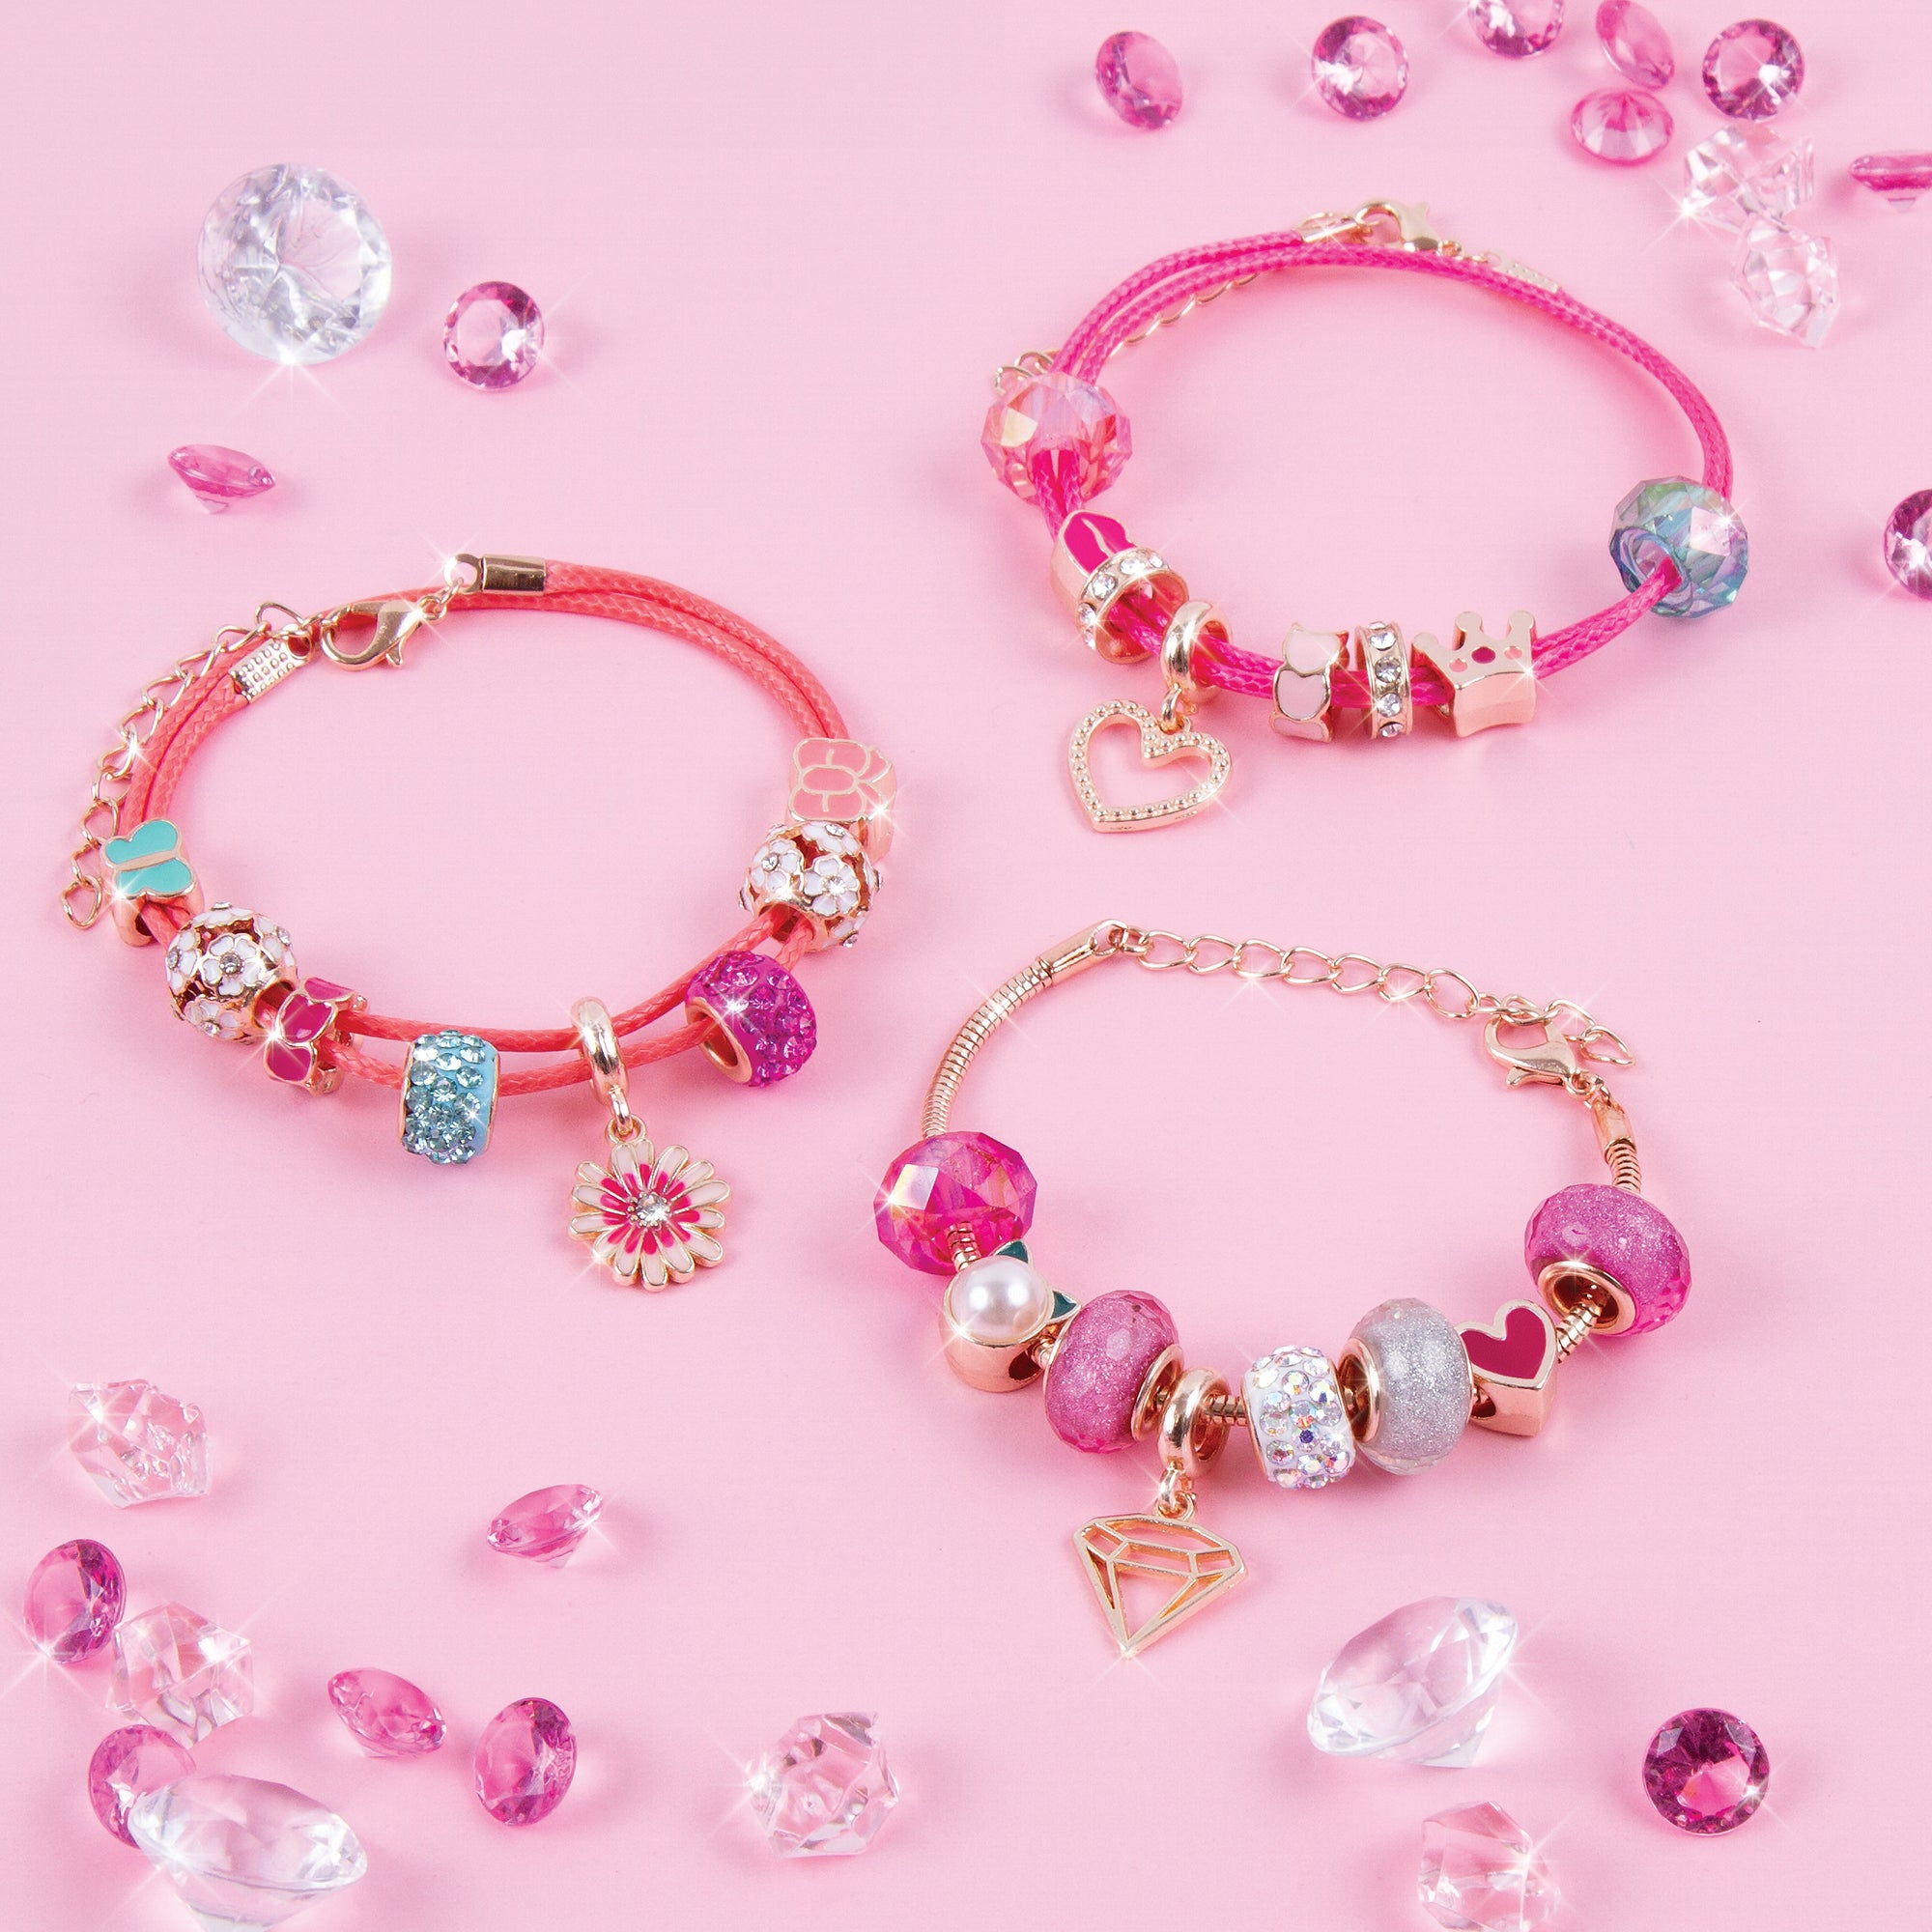 Halo Charms Bracelets: Think Pink – Make It Real